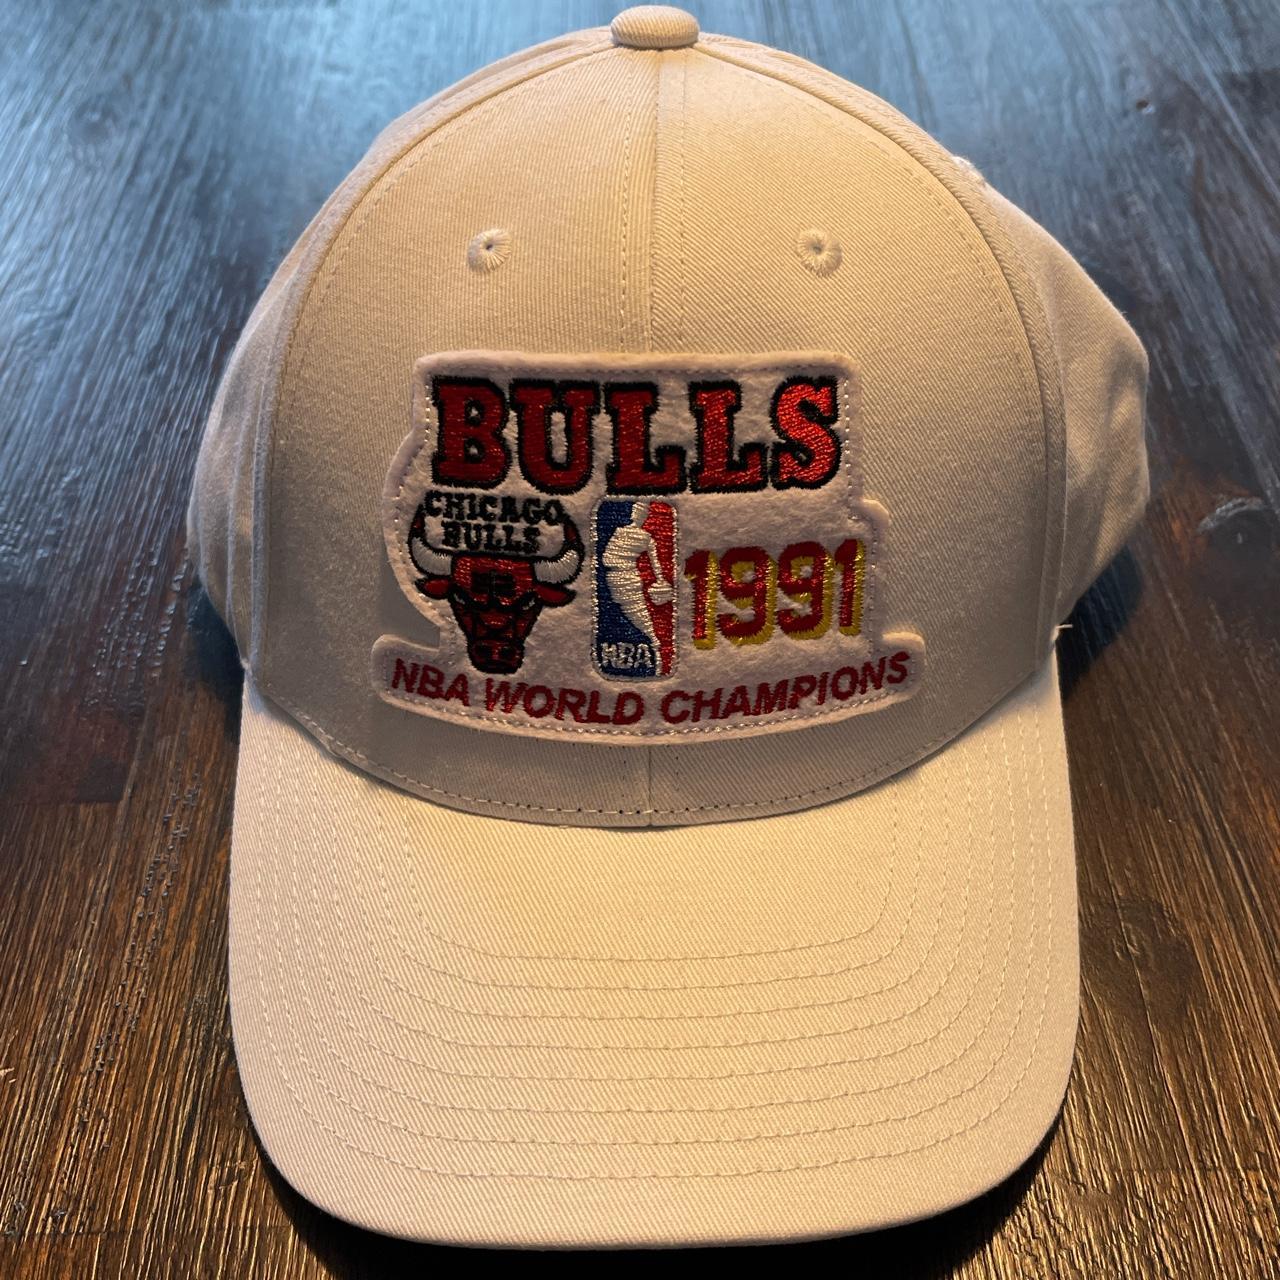 bulls 91 championship hat